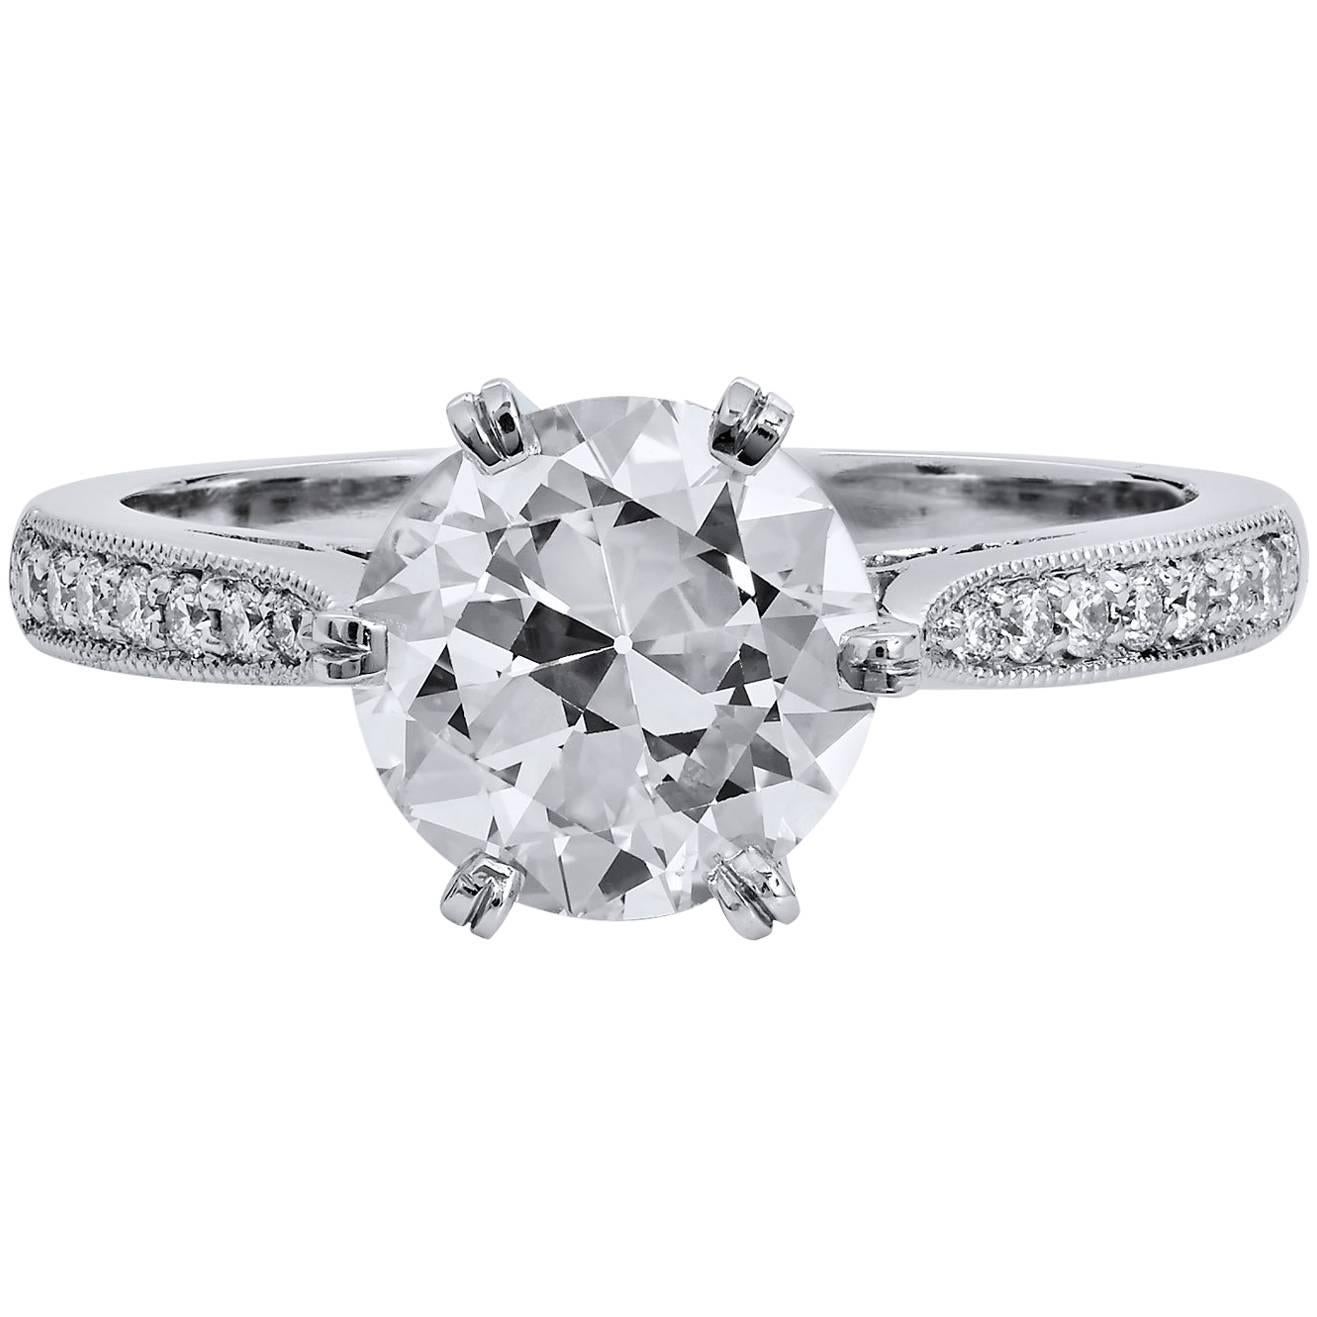 H & H 1.81 Carat Transitional Cut Diamond Engagement Ring